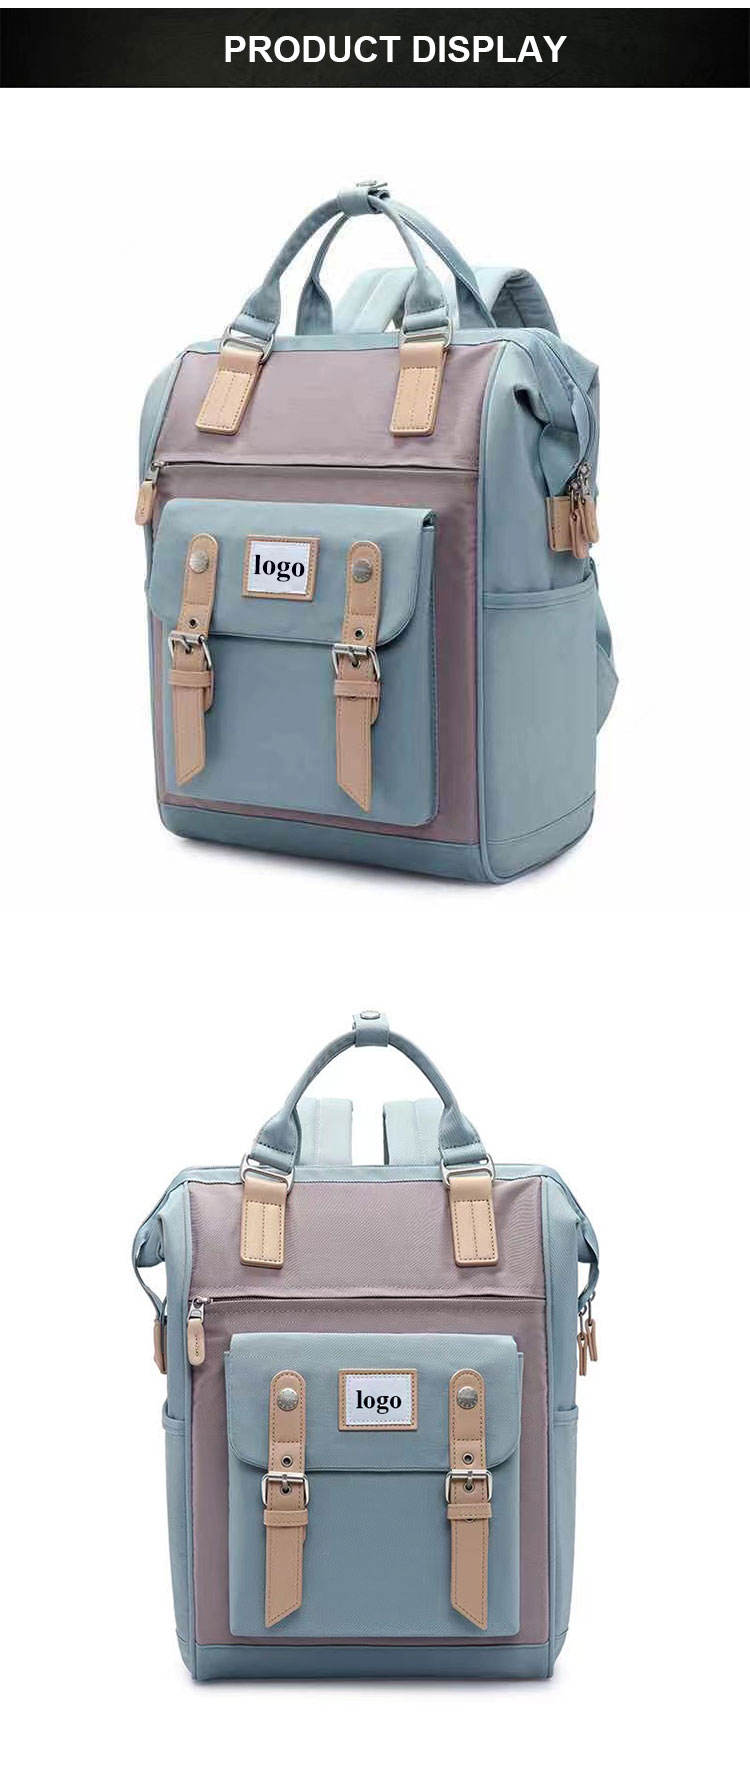 Travel Laptop Backpack Product Details